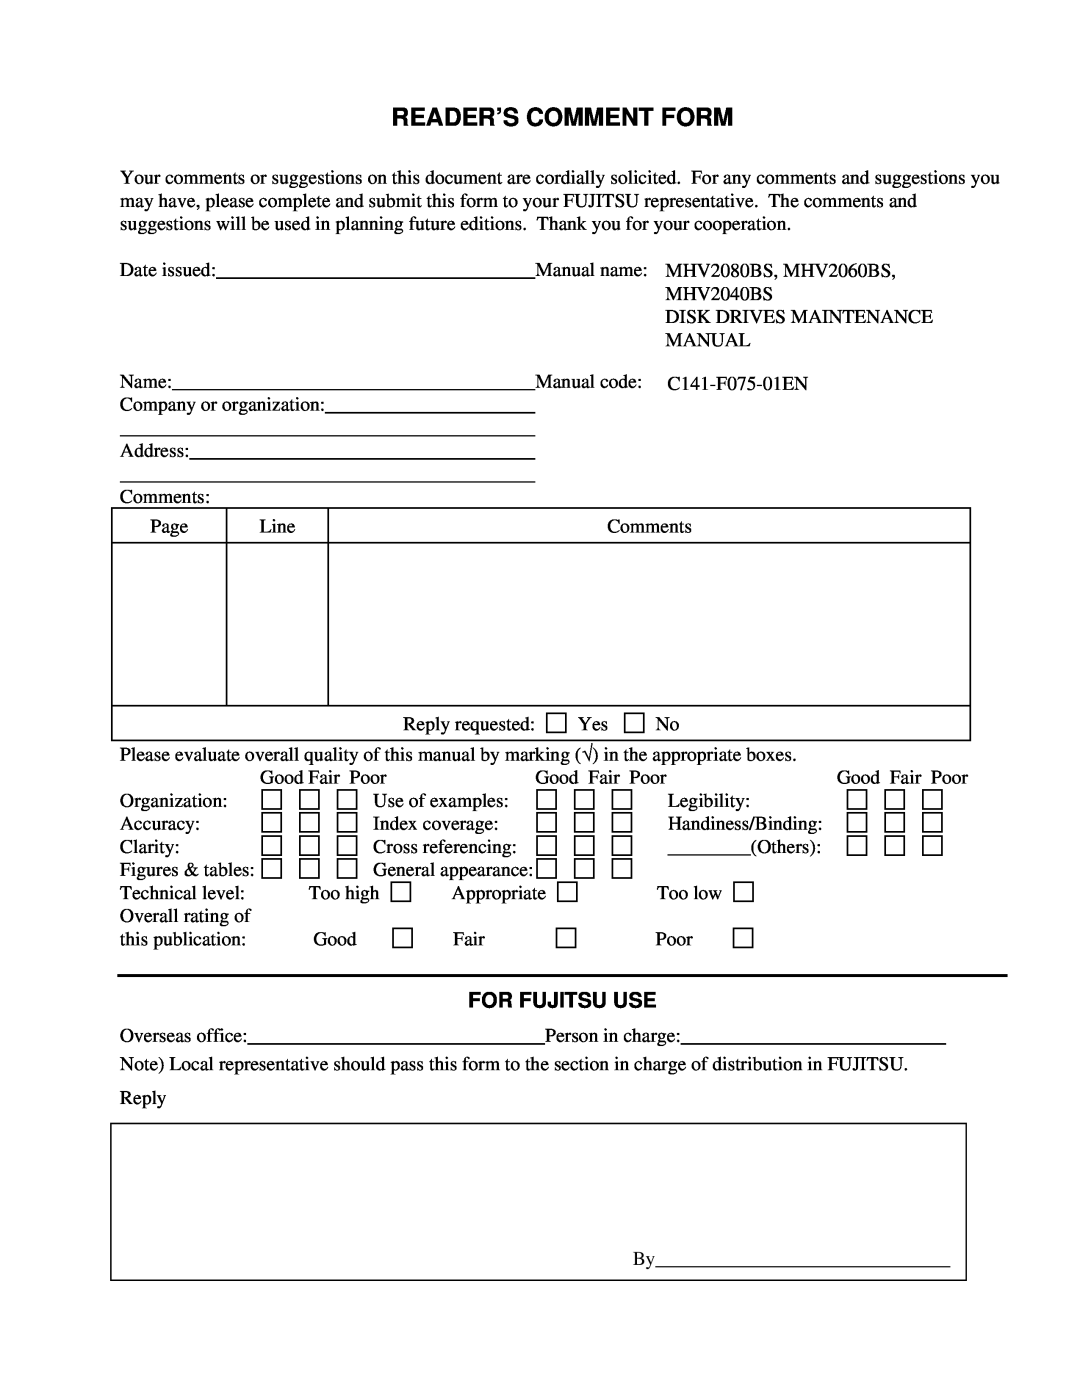 Fujitsu MHV2060BS, MHV2080BS, MHV2040BS manual Reader’S Comment Form, For Fujitsu Use 